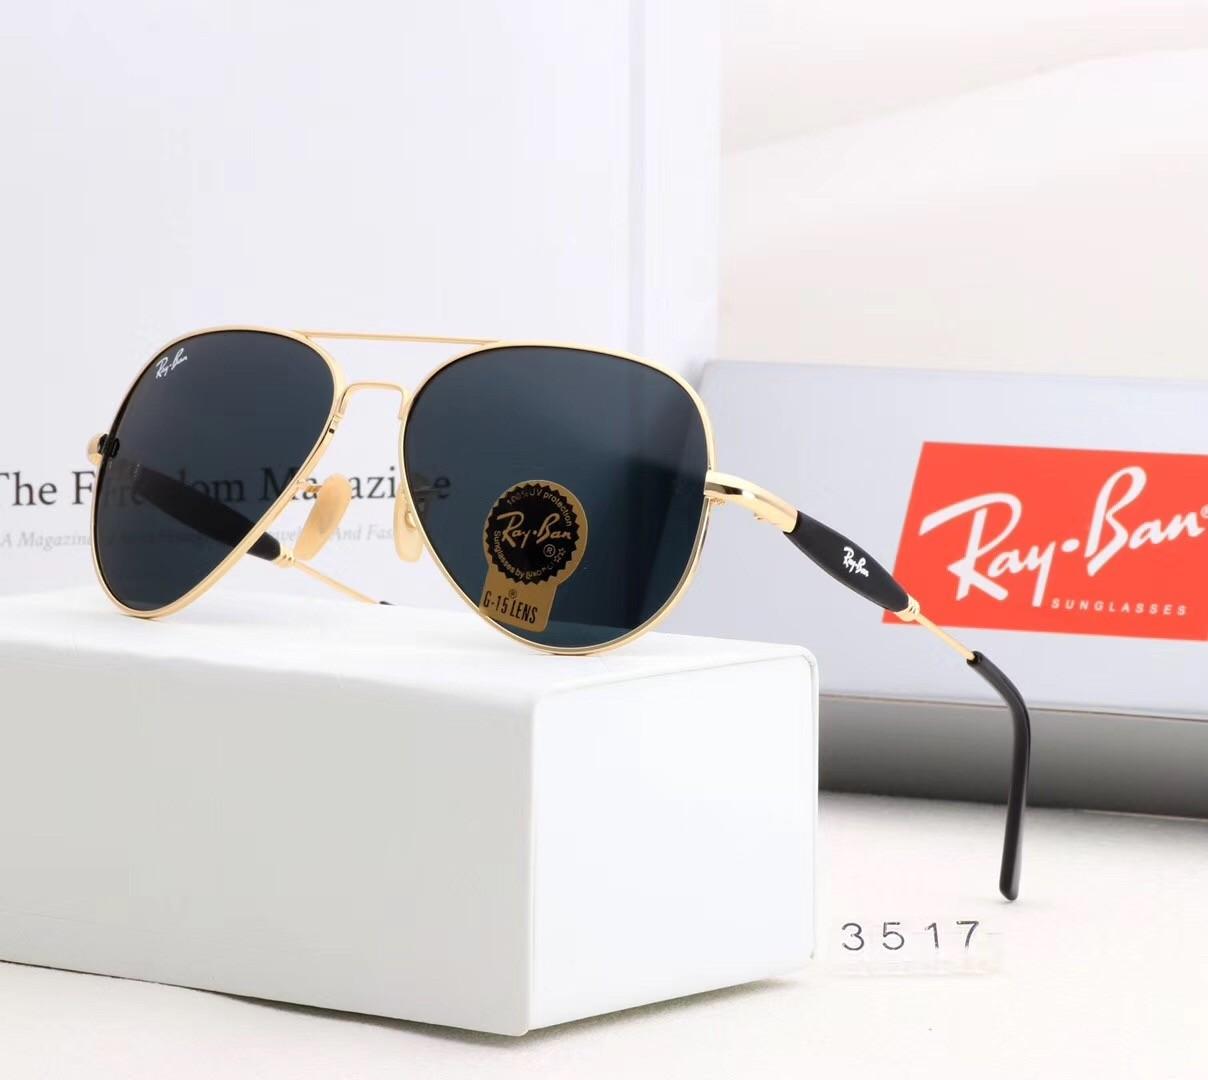 Ray Ban RB3517 Sunglasses Gray/Gold with Black – Cheap Ray Ban Sunglasses